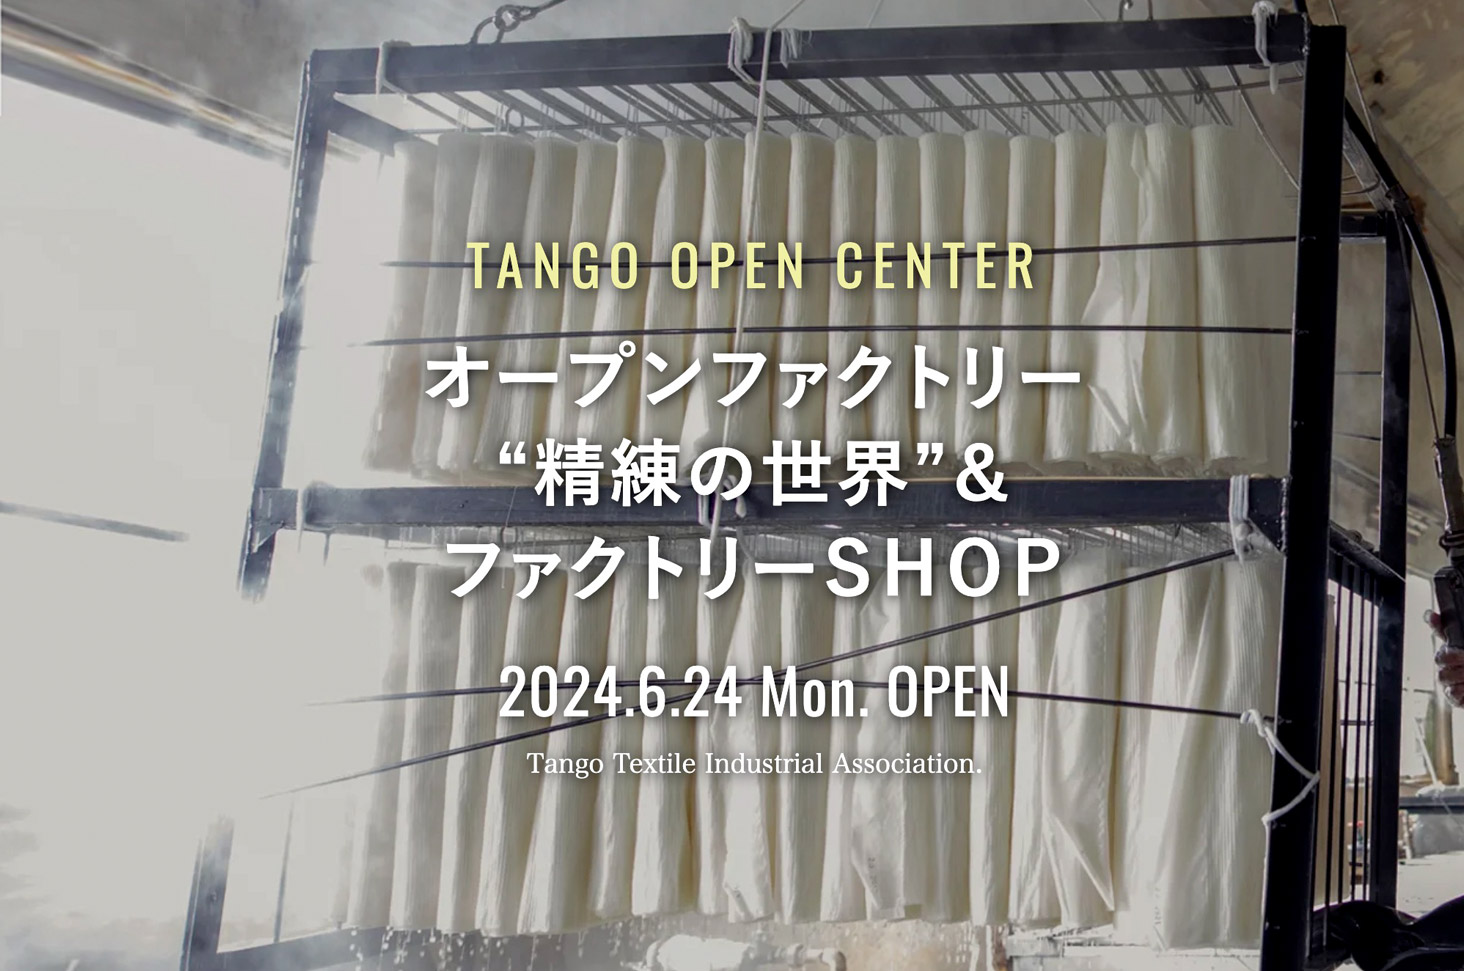 TANGO OPEN CENTERオープンファクトリー“精練の世界”を体感する見学ツアー＆ファクトリーSHOP 6.24OPEN